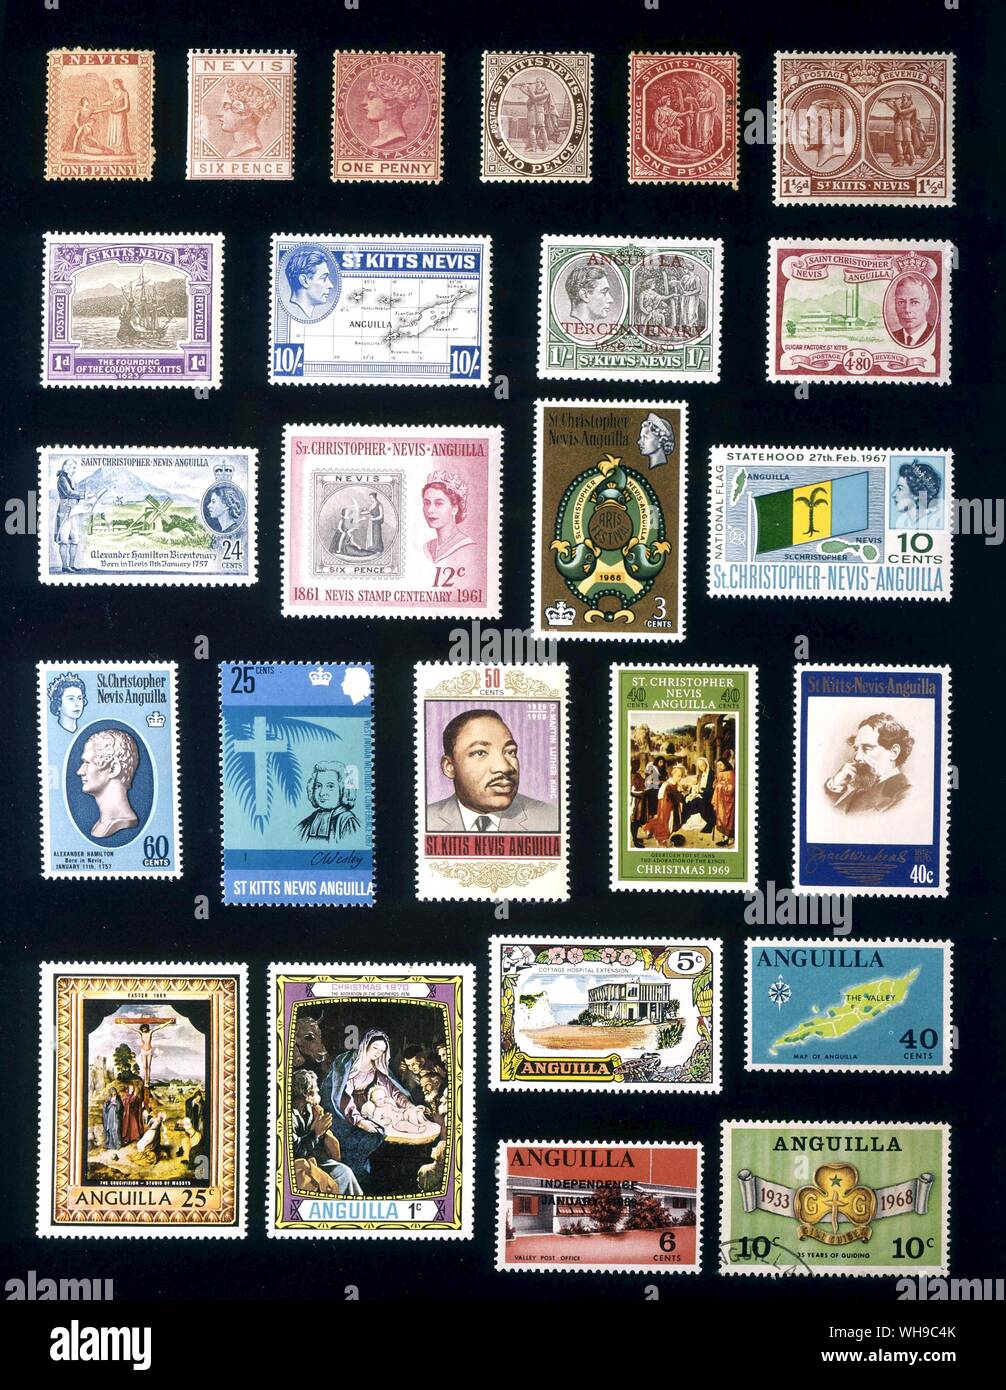 AMERICA - ST CHRISTOPHER, NEVIS E ANGUILLA: (da sinistra a destra) 1. Nevis, 1 centesimo, 1861, 2. Nevis, 6 pence, 1883, 3. St Christopher, 1 centesimo, 1870, 4. St Kitts-Nevis, 2 pence, 1903, 5. St Kitts-Nevis, 1 centesimo, 1907, 6. St Kitts-Nevis, 1,5 pence, 1920, 7. St Kitts-Nevis, 1 centesimo, 1923 8. St Kitts-Nevis, 10 denari, 1948, 9. St Kitts-Nevis, 1 scellino, 1950, 10. St Christopher-Nevis-Anguilla, 4,80 dollari, 1952, 11. St Christopher-Nevis-Anguilla, 24 centesimi, 1957, 12. St Christopher-Nevis-Anguilla, 12 centesimi, 1961, 13. St Christopher-Nevis-Anguilla, 3 centesimi, 1966, 14. St Foto Stock